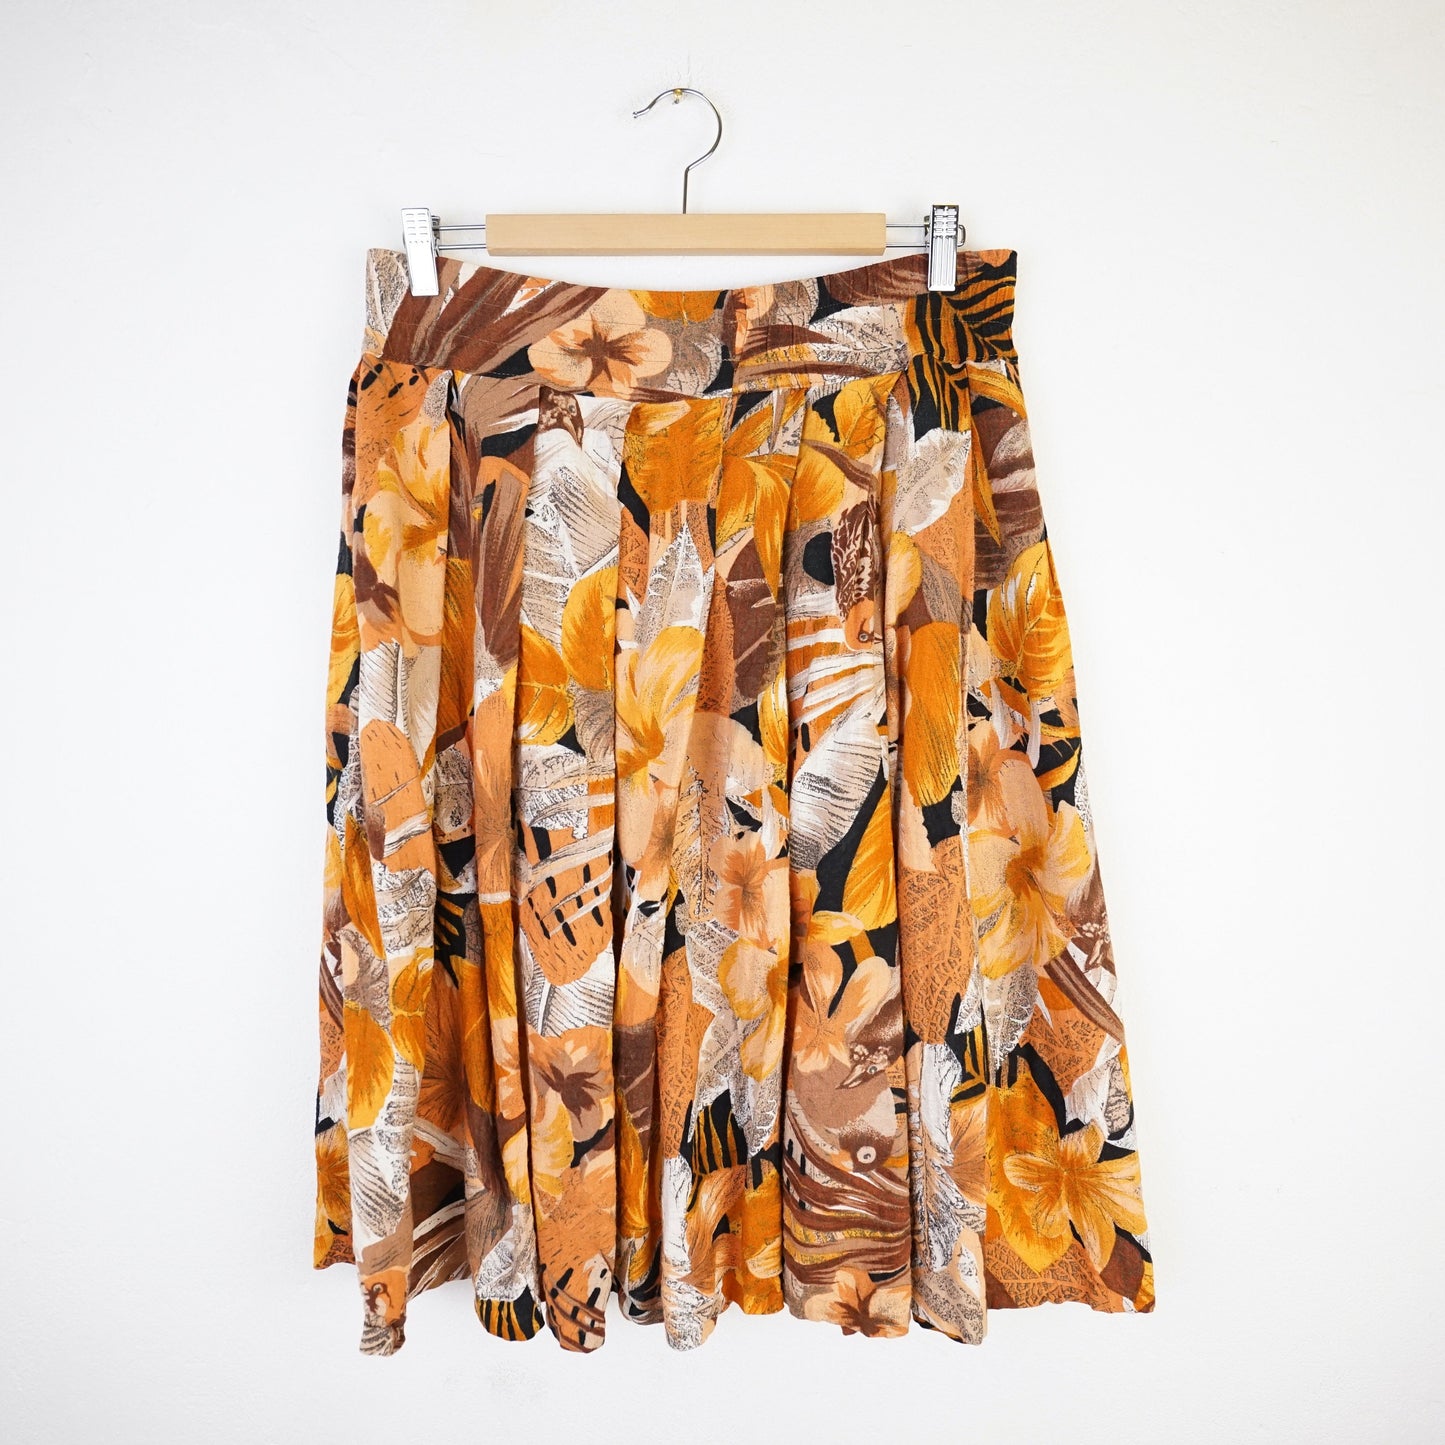 Vintage autumn leaves Skirt size M-L